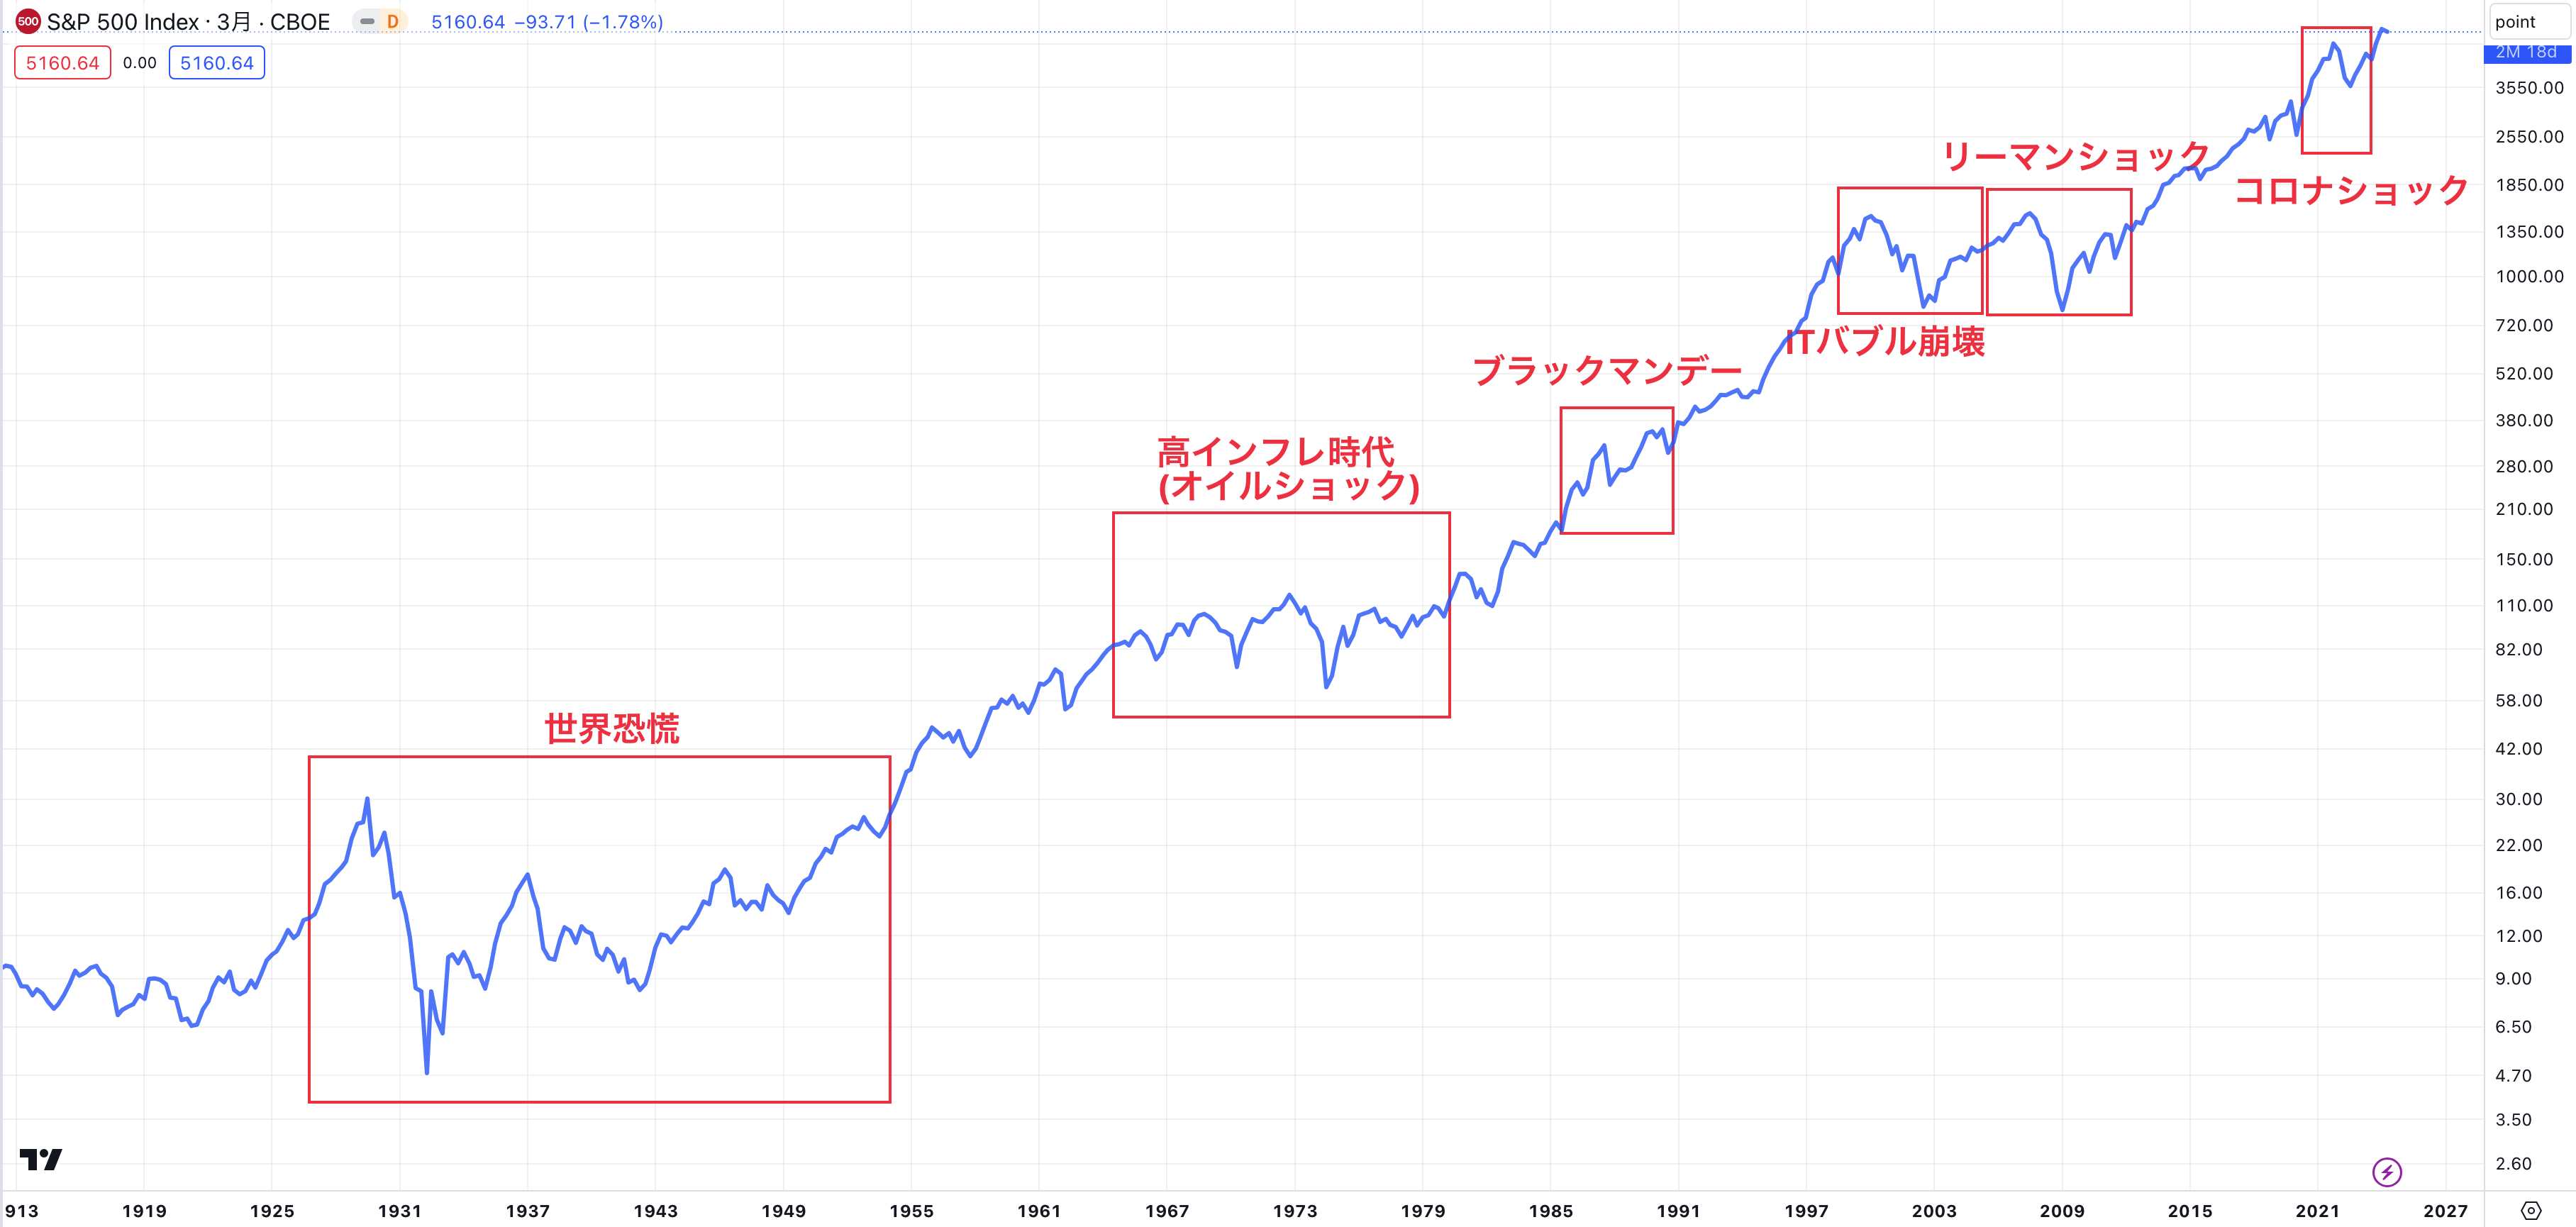 S&P500指数は暴落を繰り返しながらも上昇している